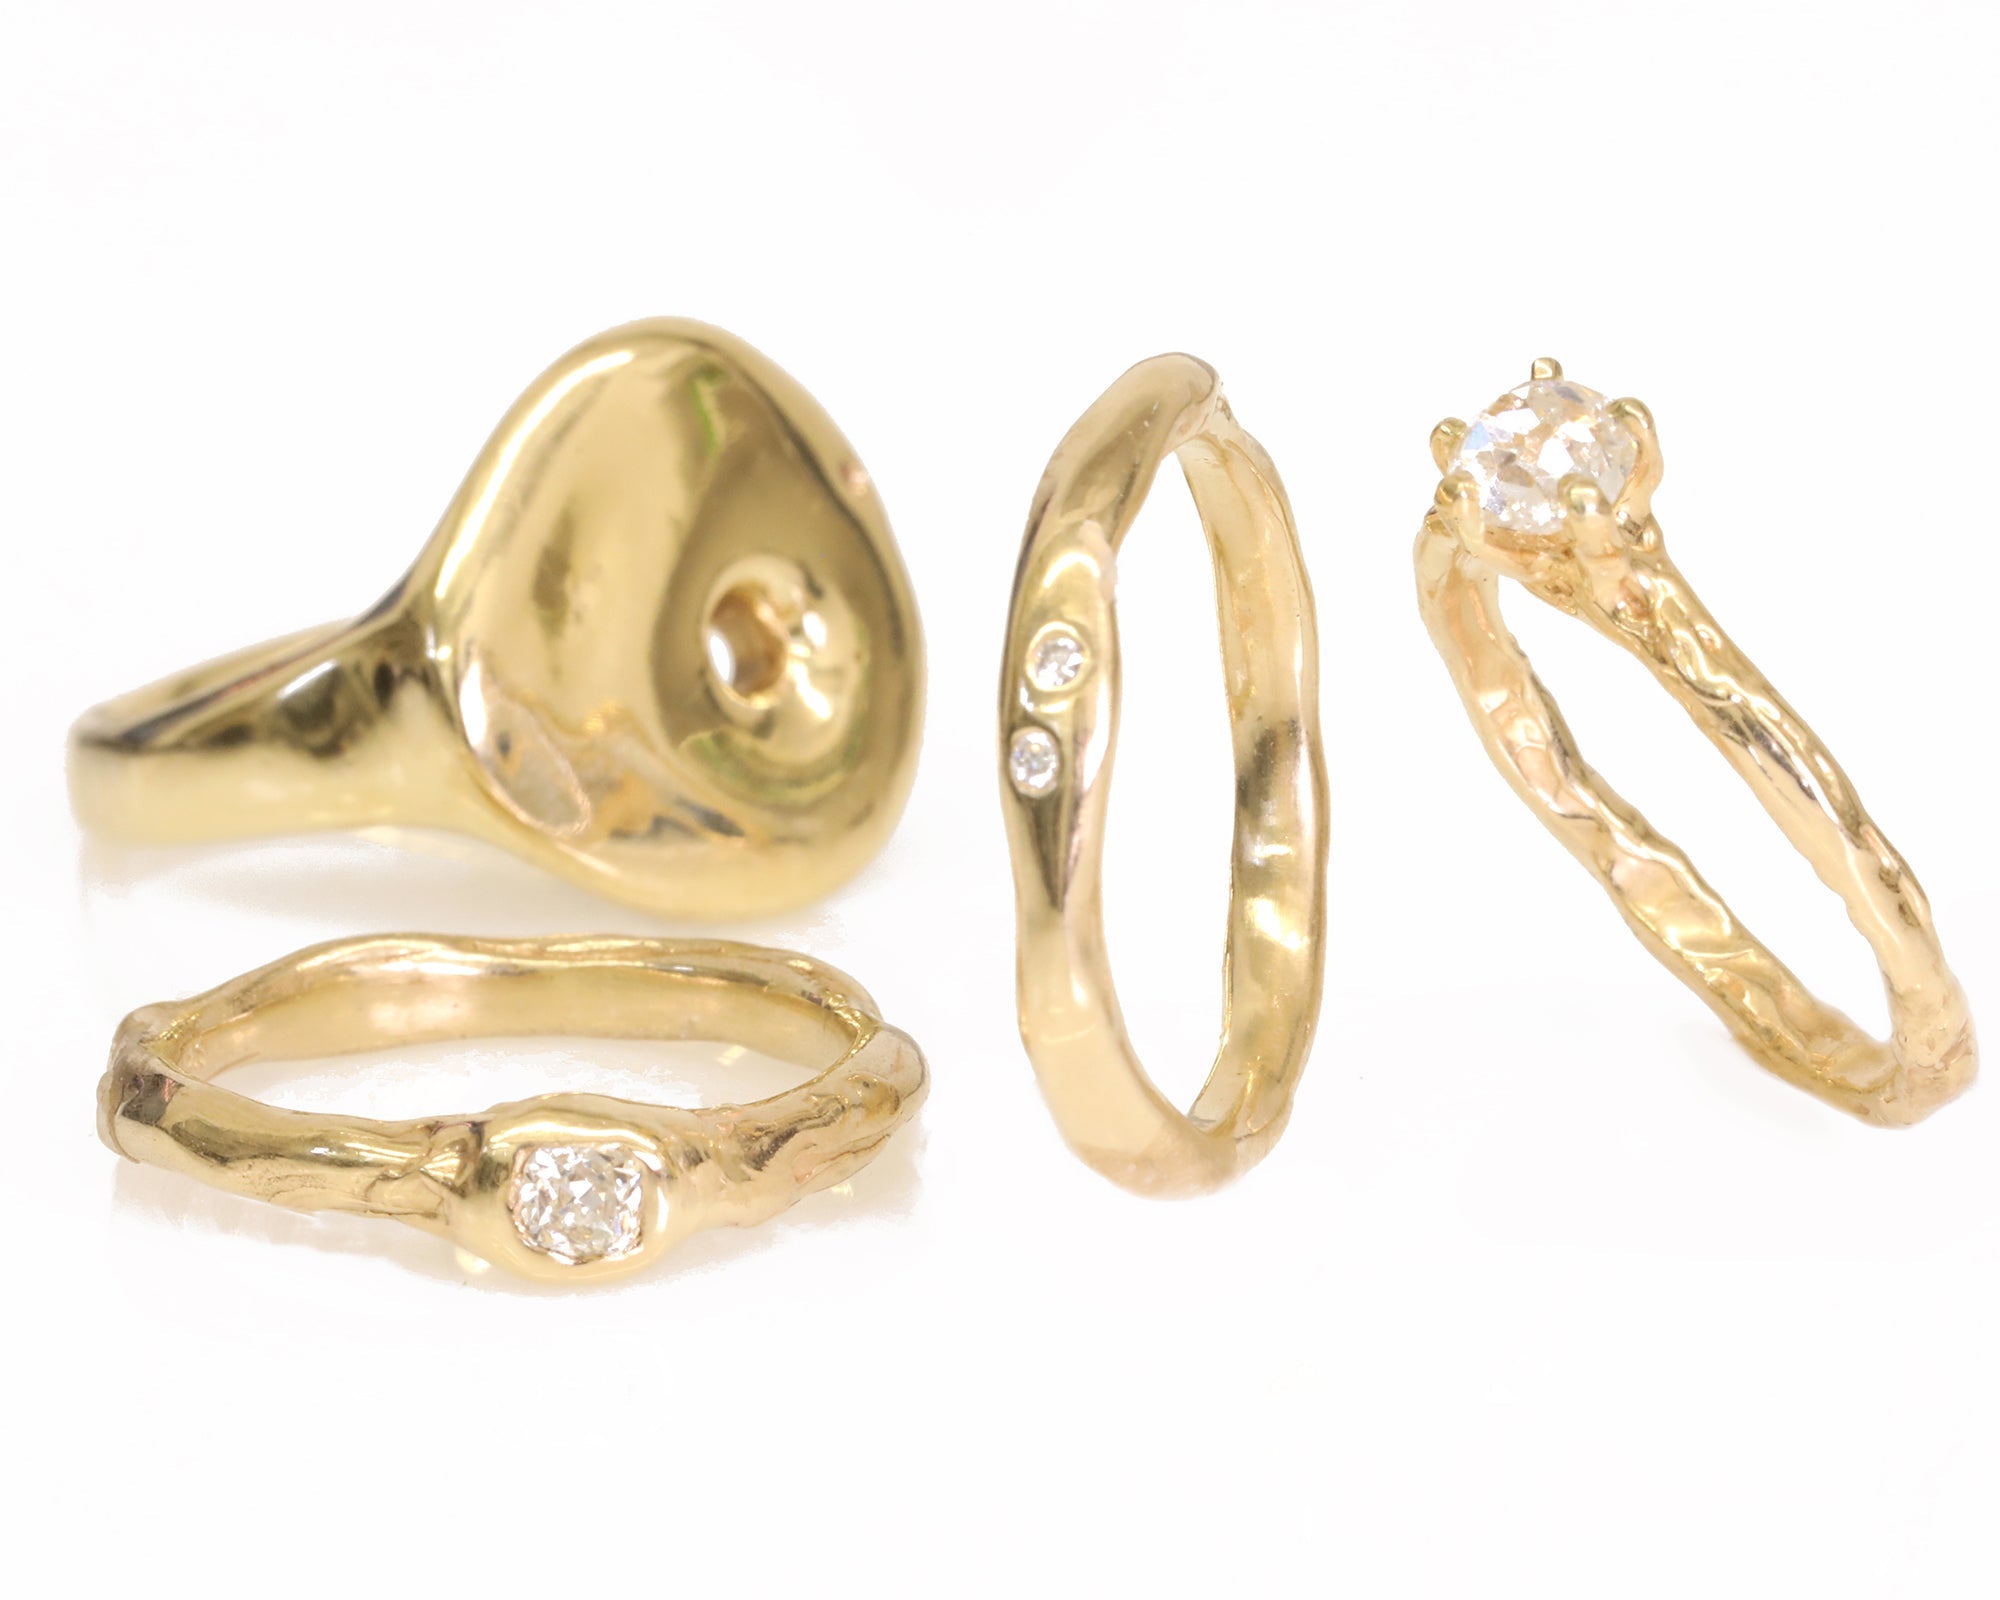 Johanna Brierley Gold European Cut Diamond Ring on Melt Band